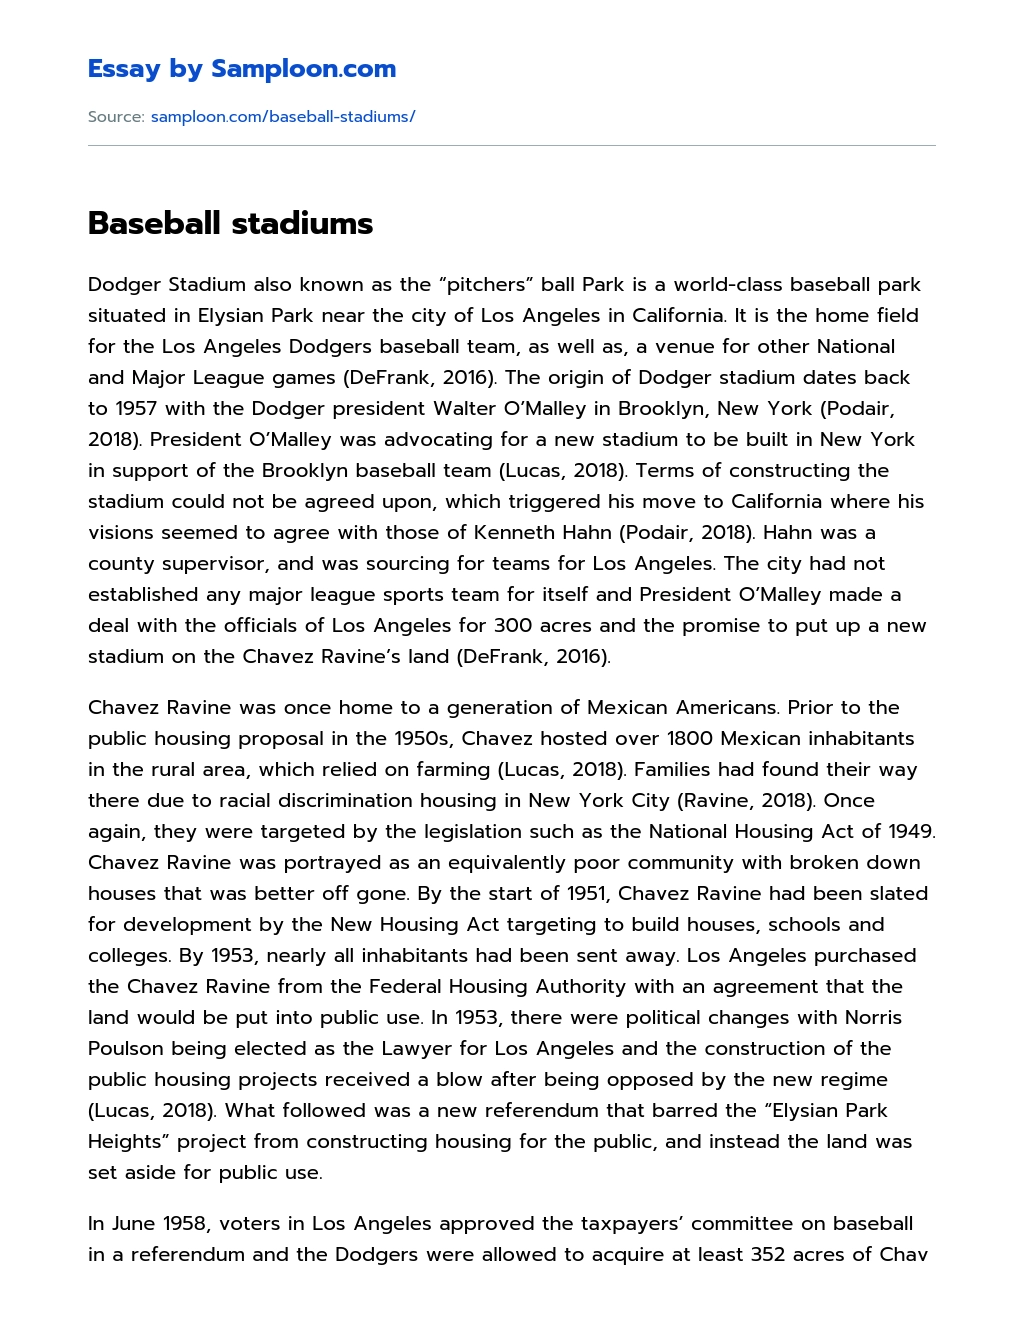 Baseball stadiums essay